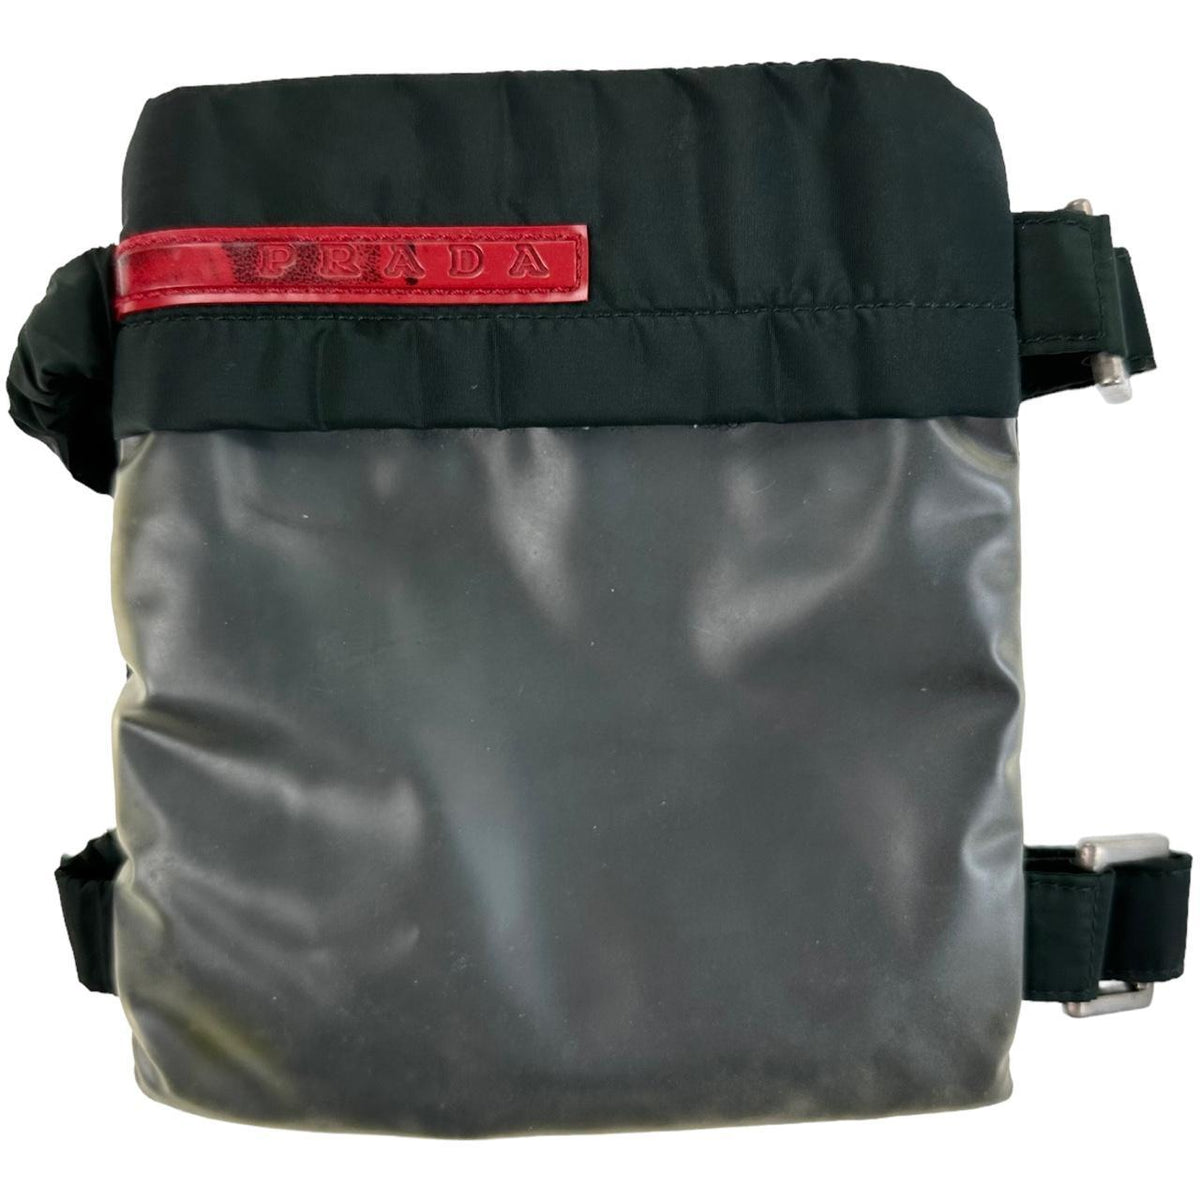 Vintage 1999 Prada Sport Arm Bag